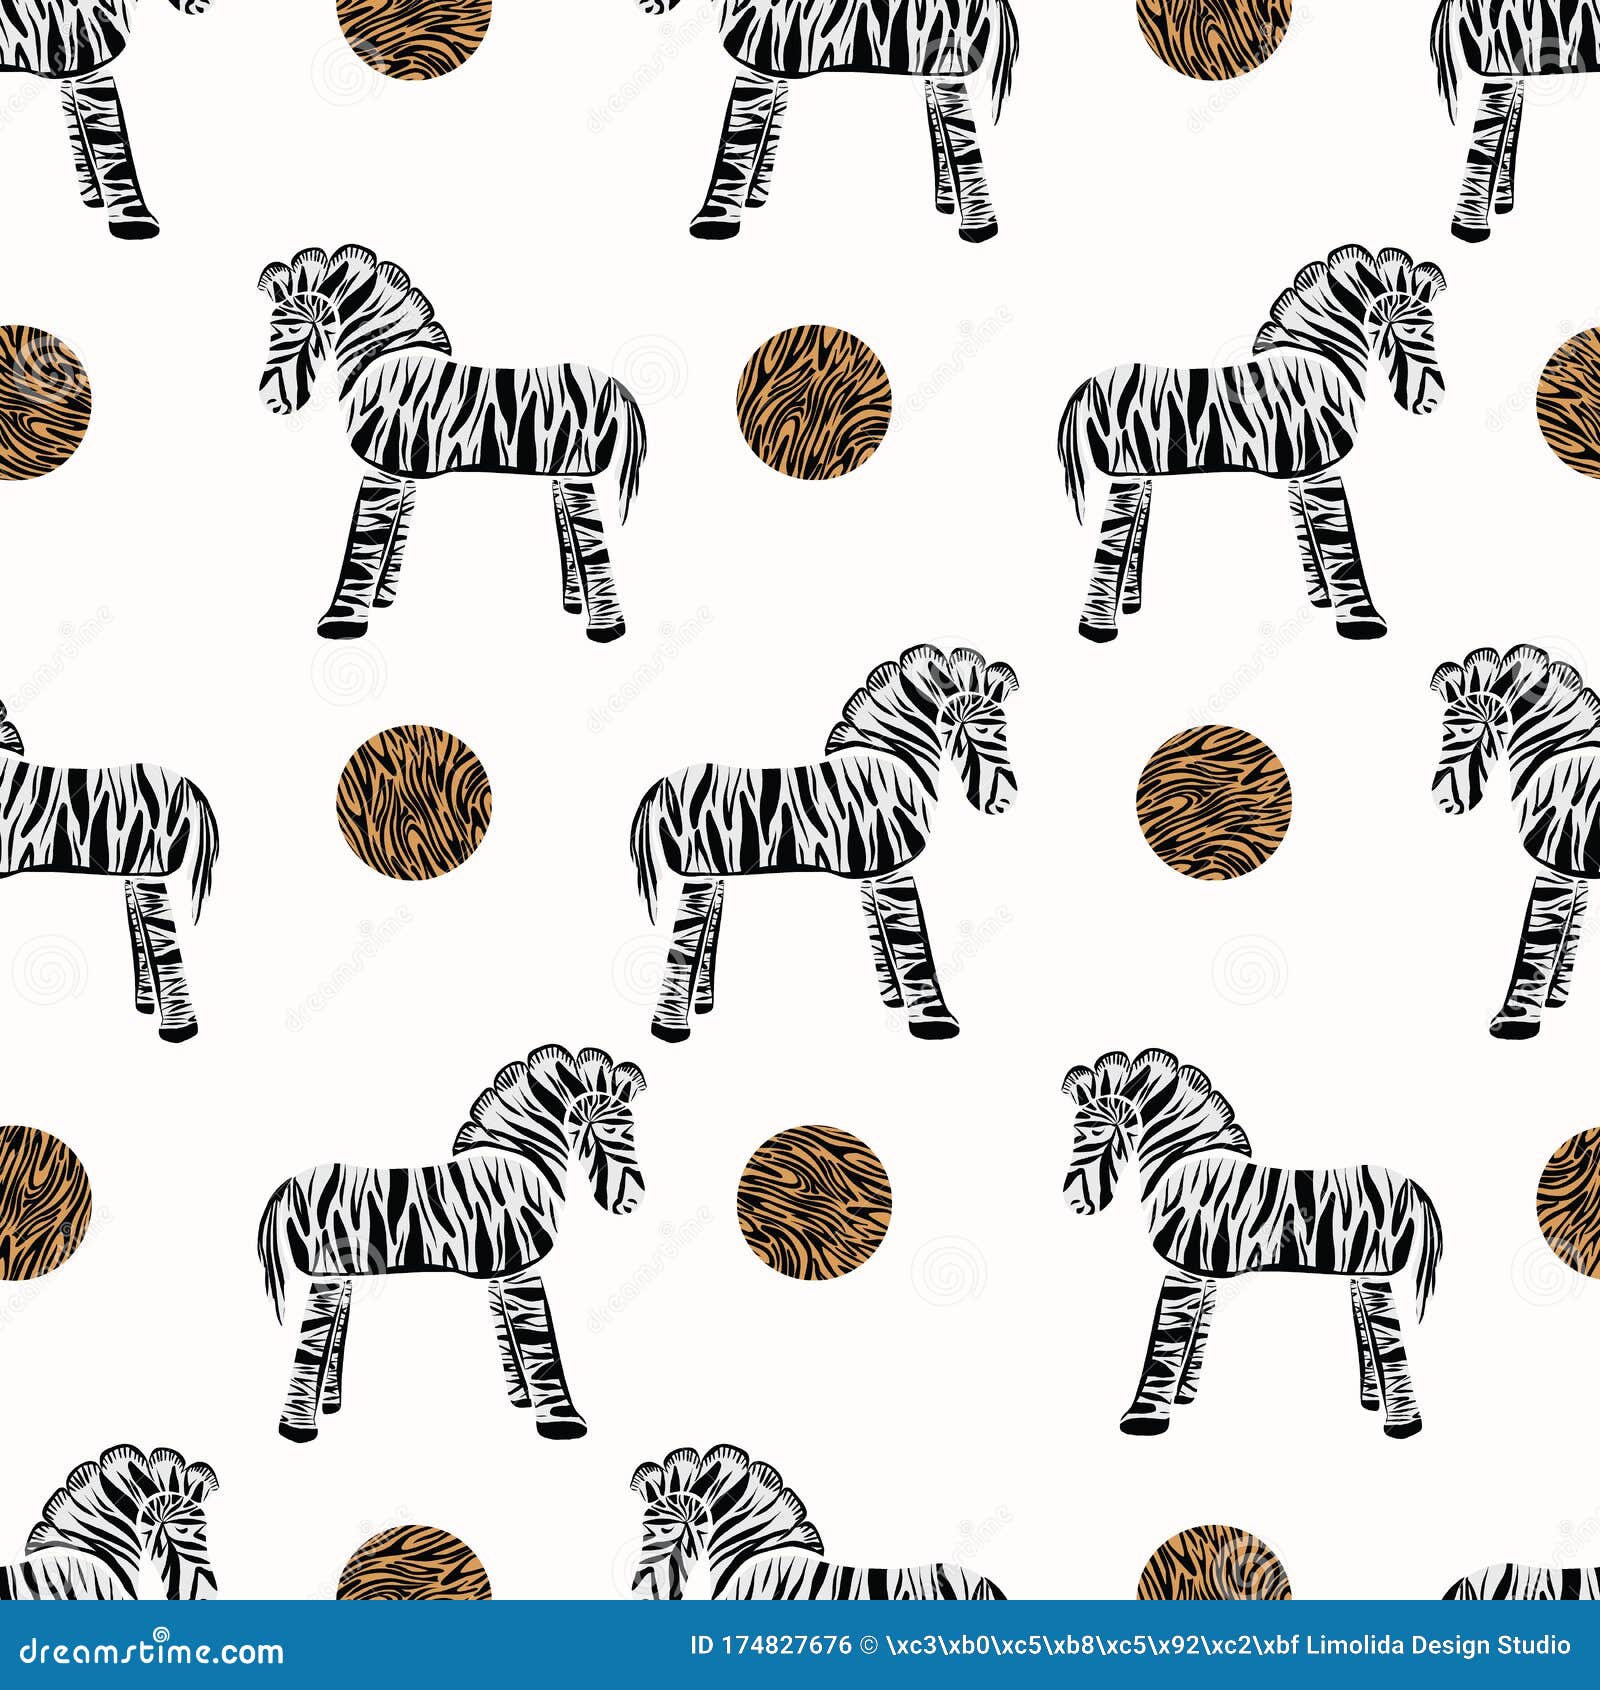 Adorable Vector Cartoon Zebra Seamless Pattern Cute Safari Animal